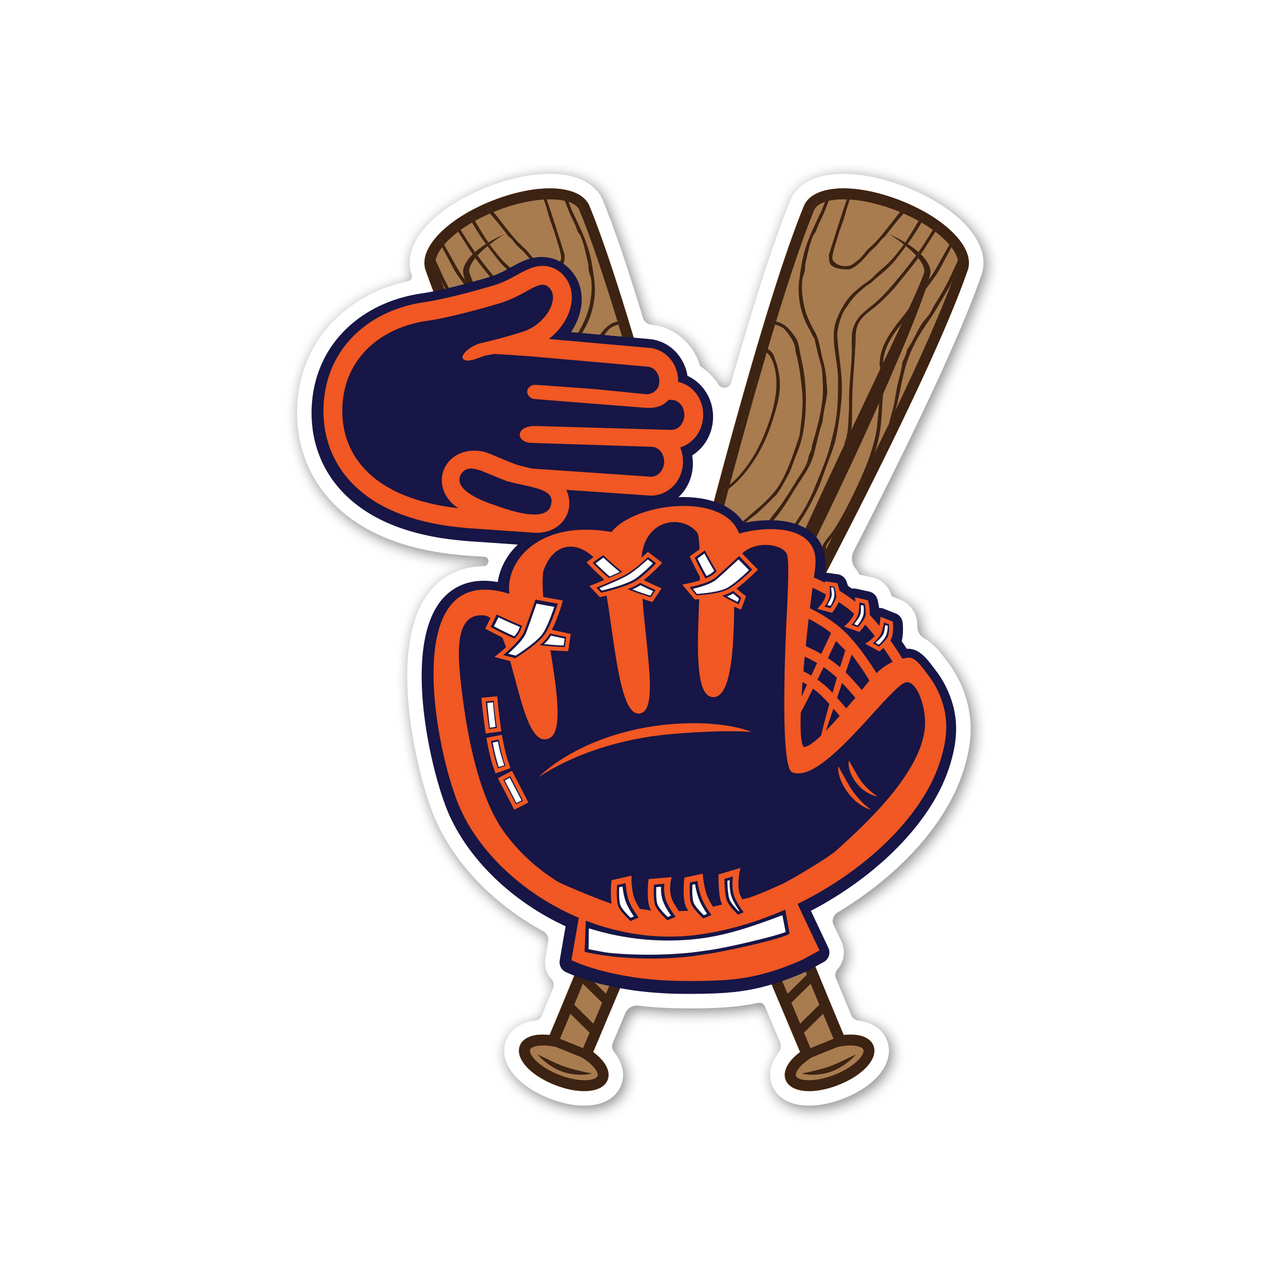 Baseball in the Mitt Sticker